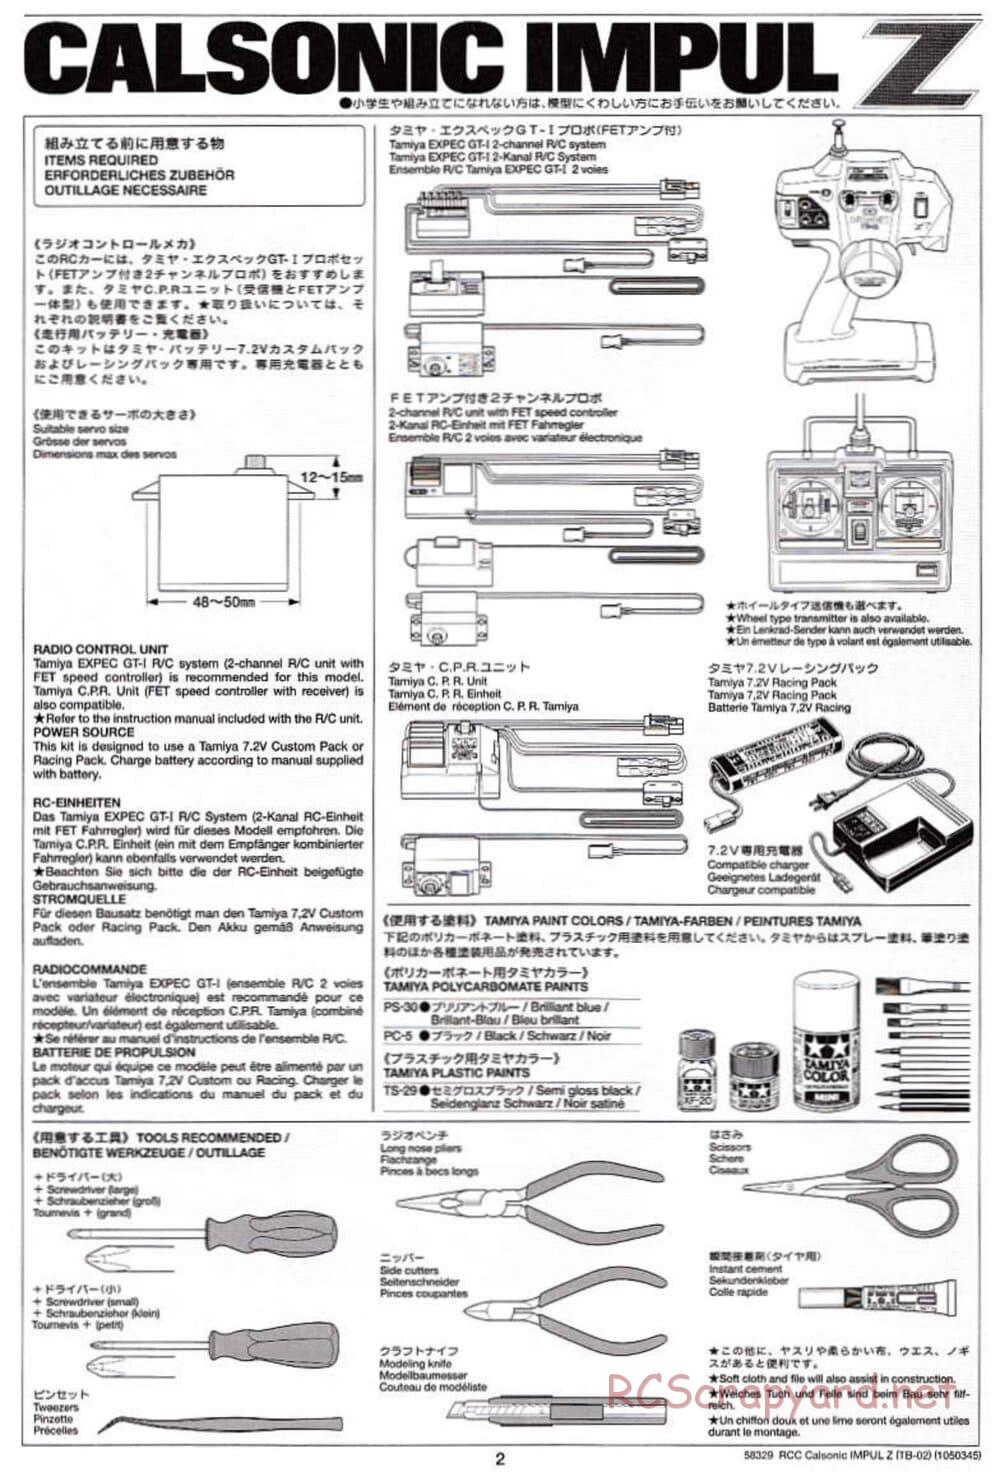 Tamiya - Calsonic Impul Z - TB-02 Chassis - Manual - Page 2